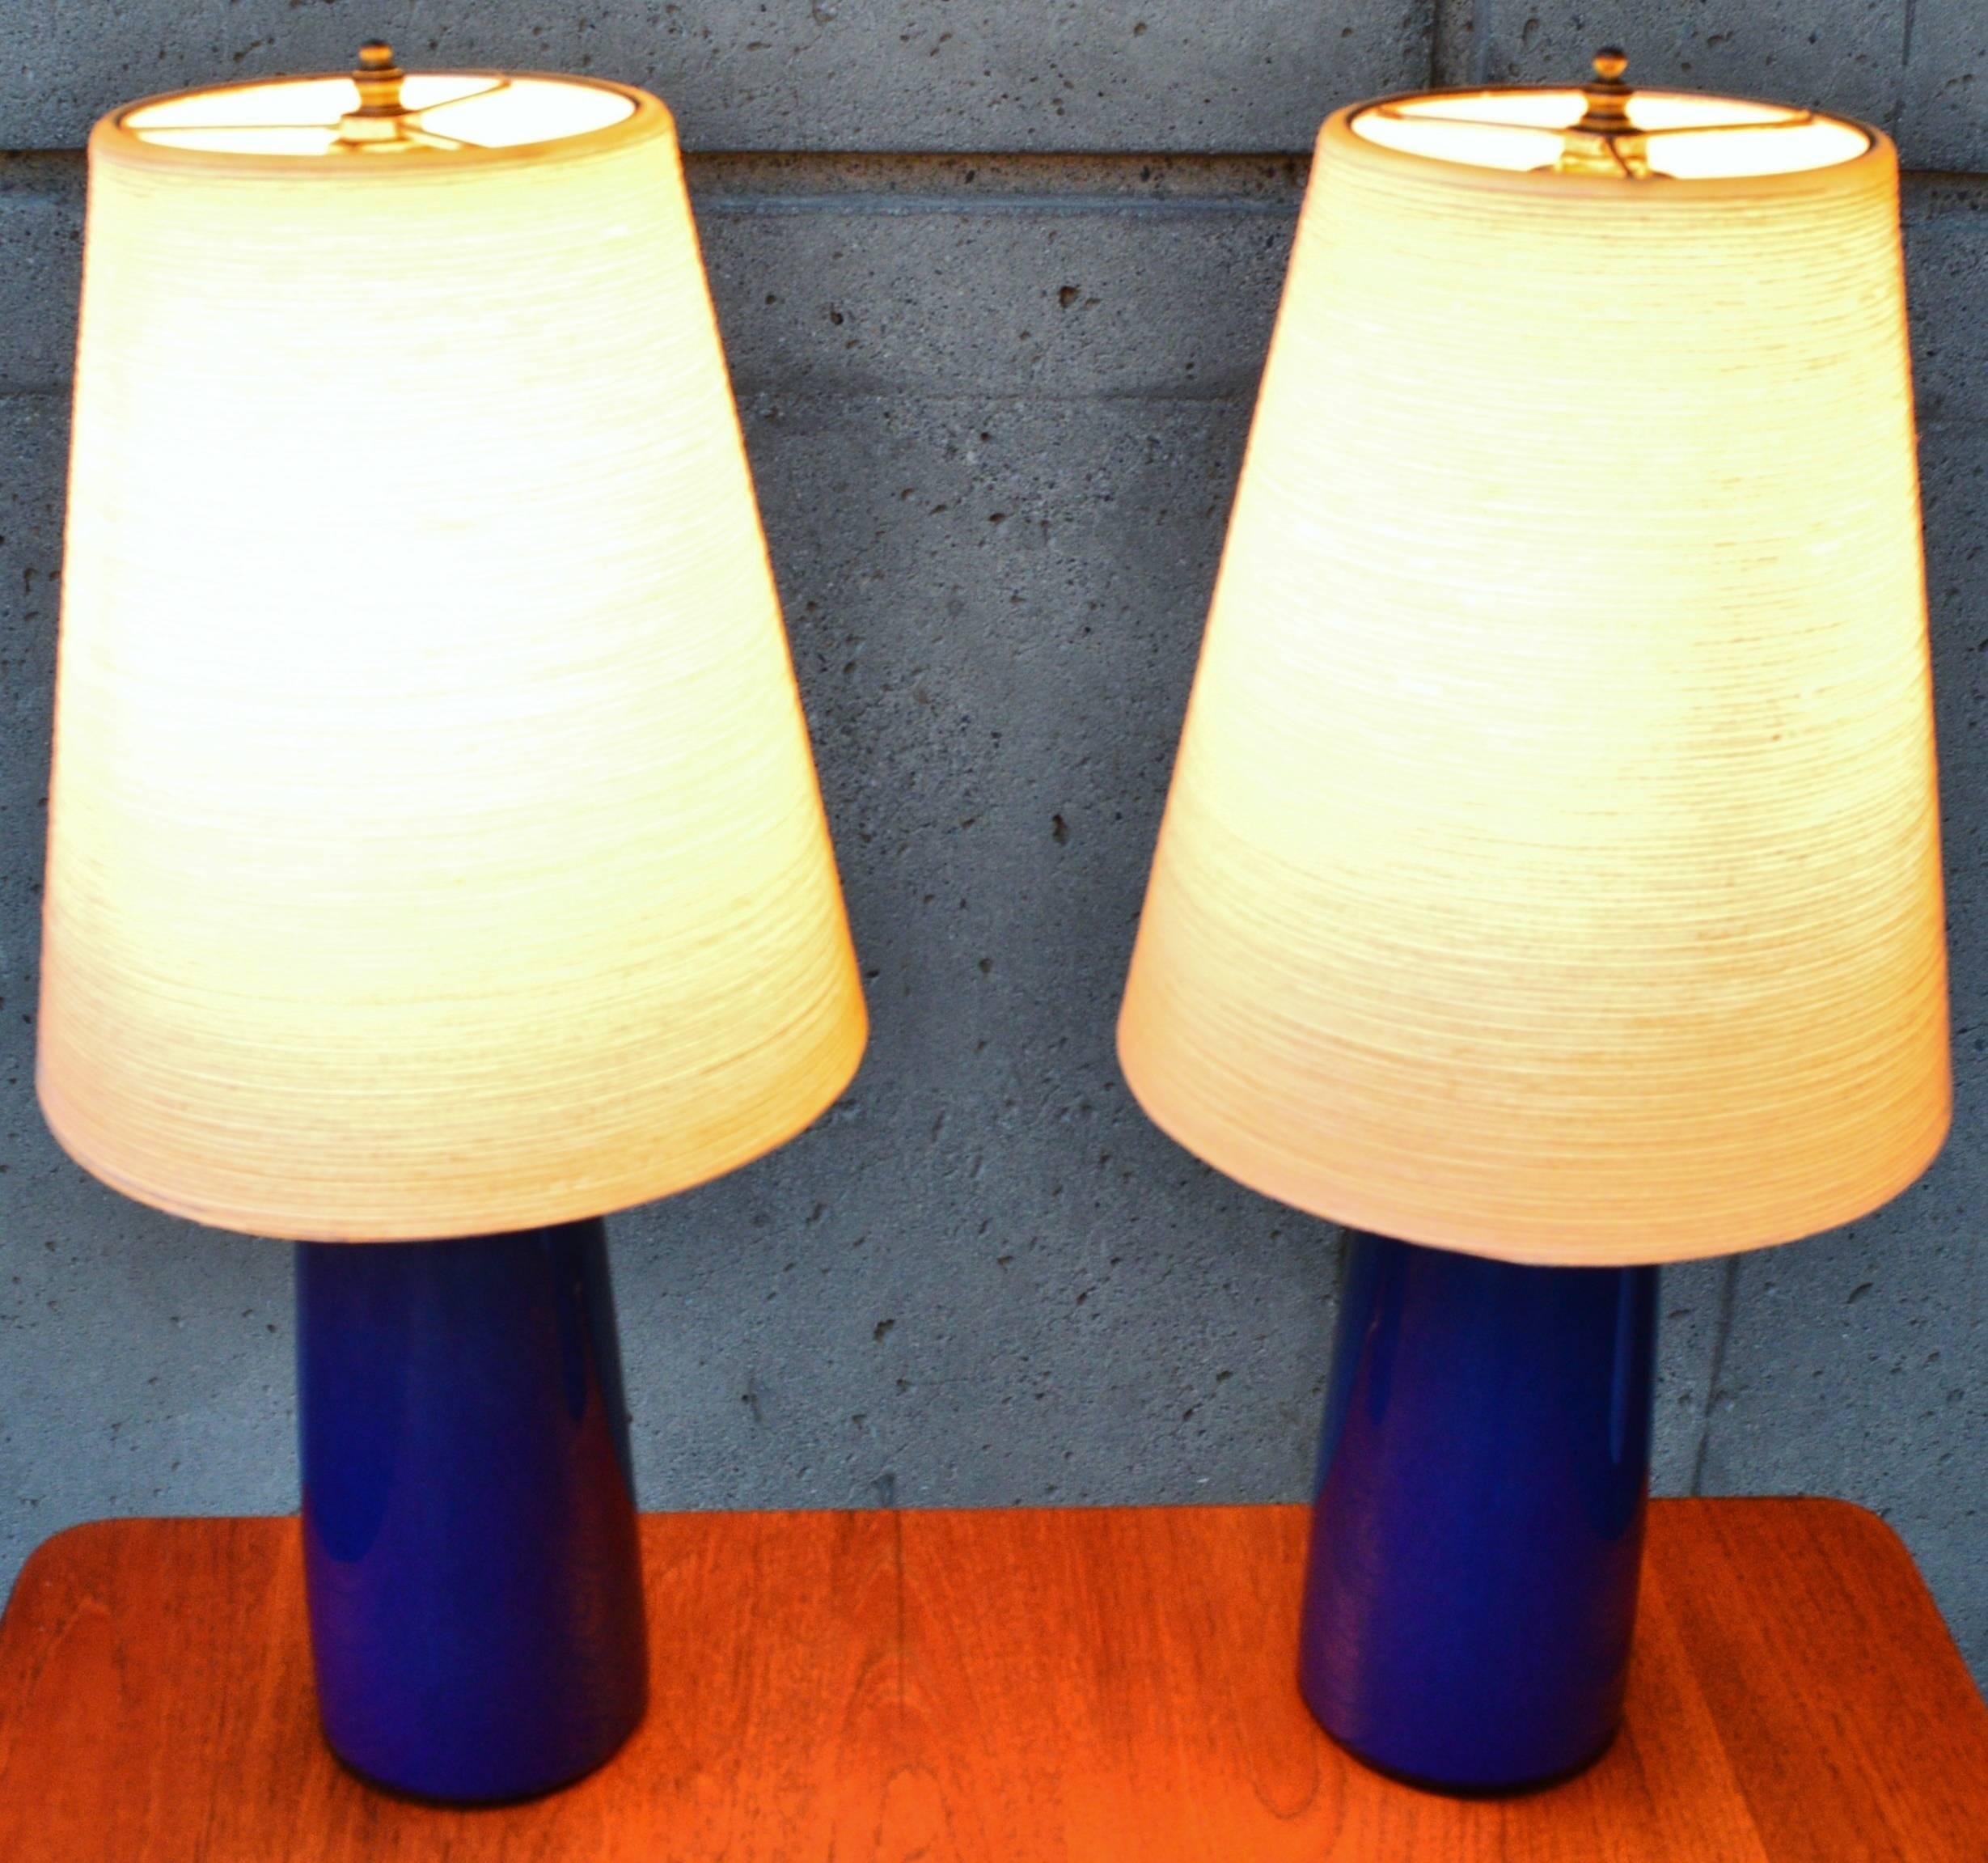 Canadian Hot Pair Cobalt Blue Lotte Lamps Original Shades